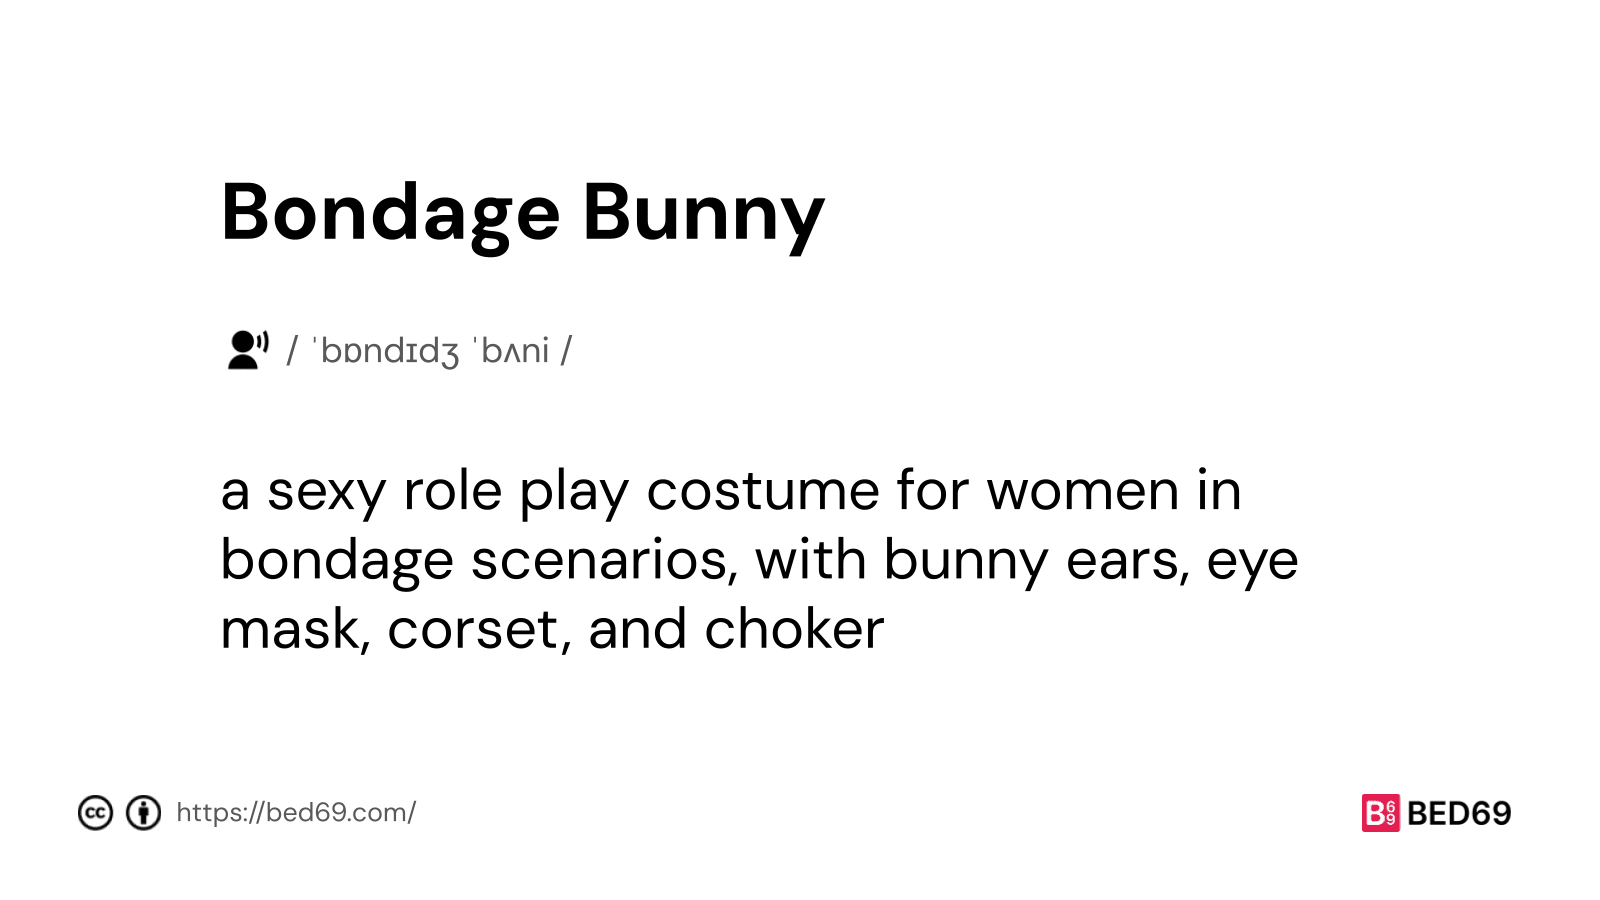 Bondage Bunny - Word Definition